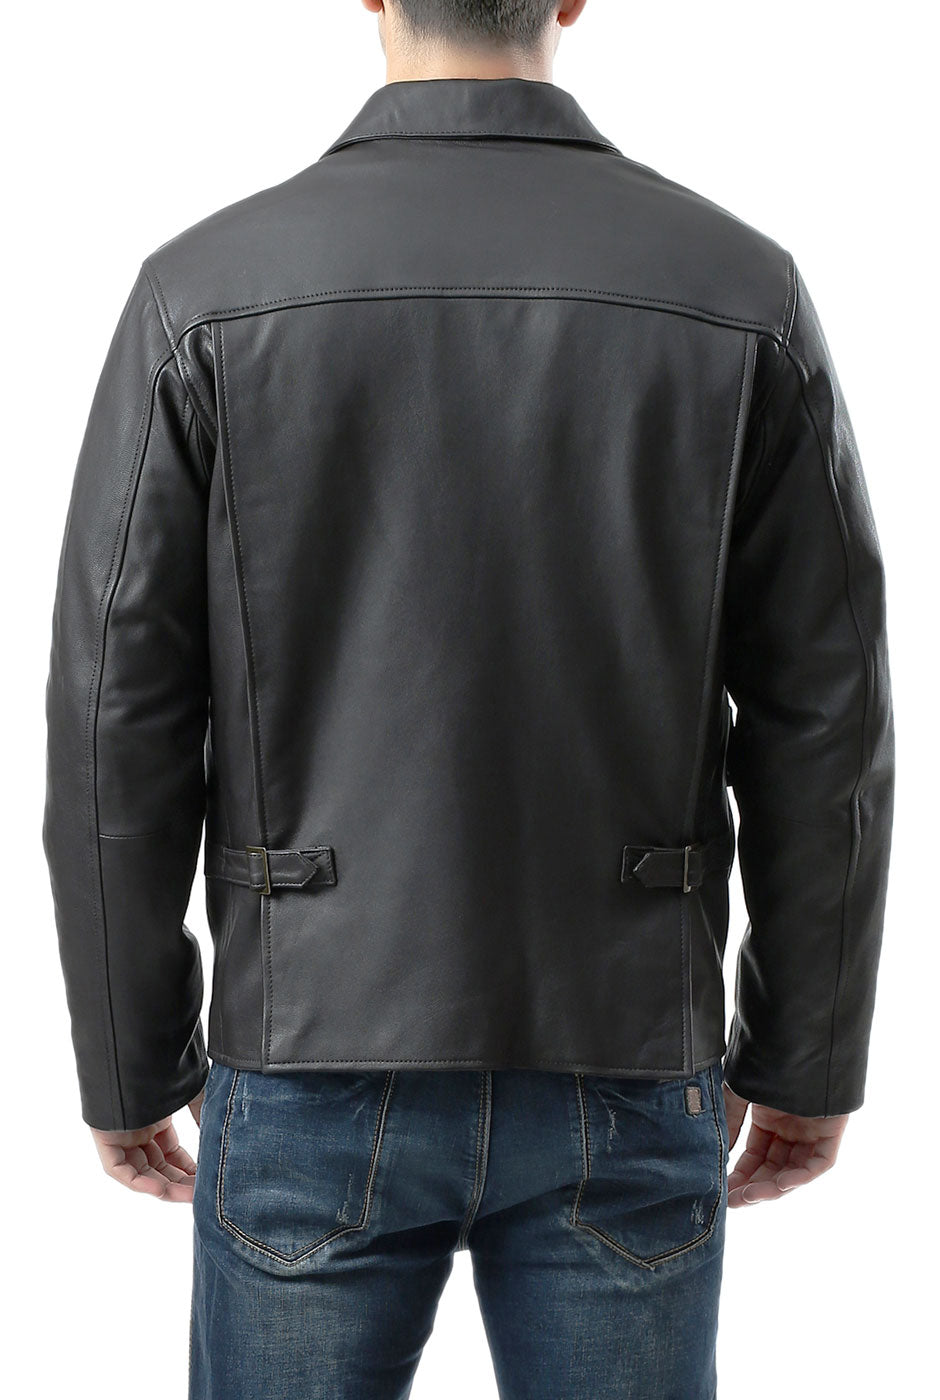 Landing Leathers Men Raider Indy-Style Leather Legend Jacket